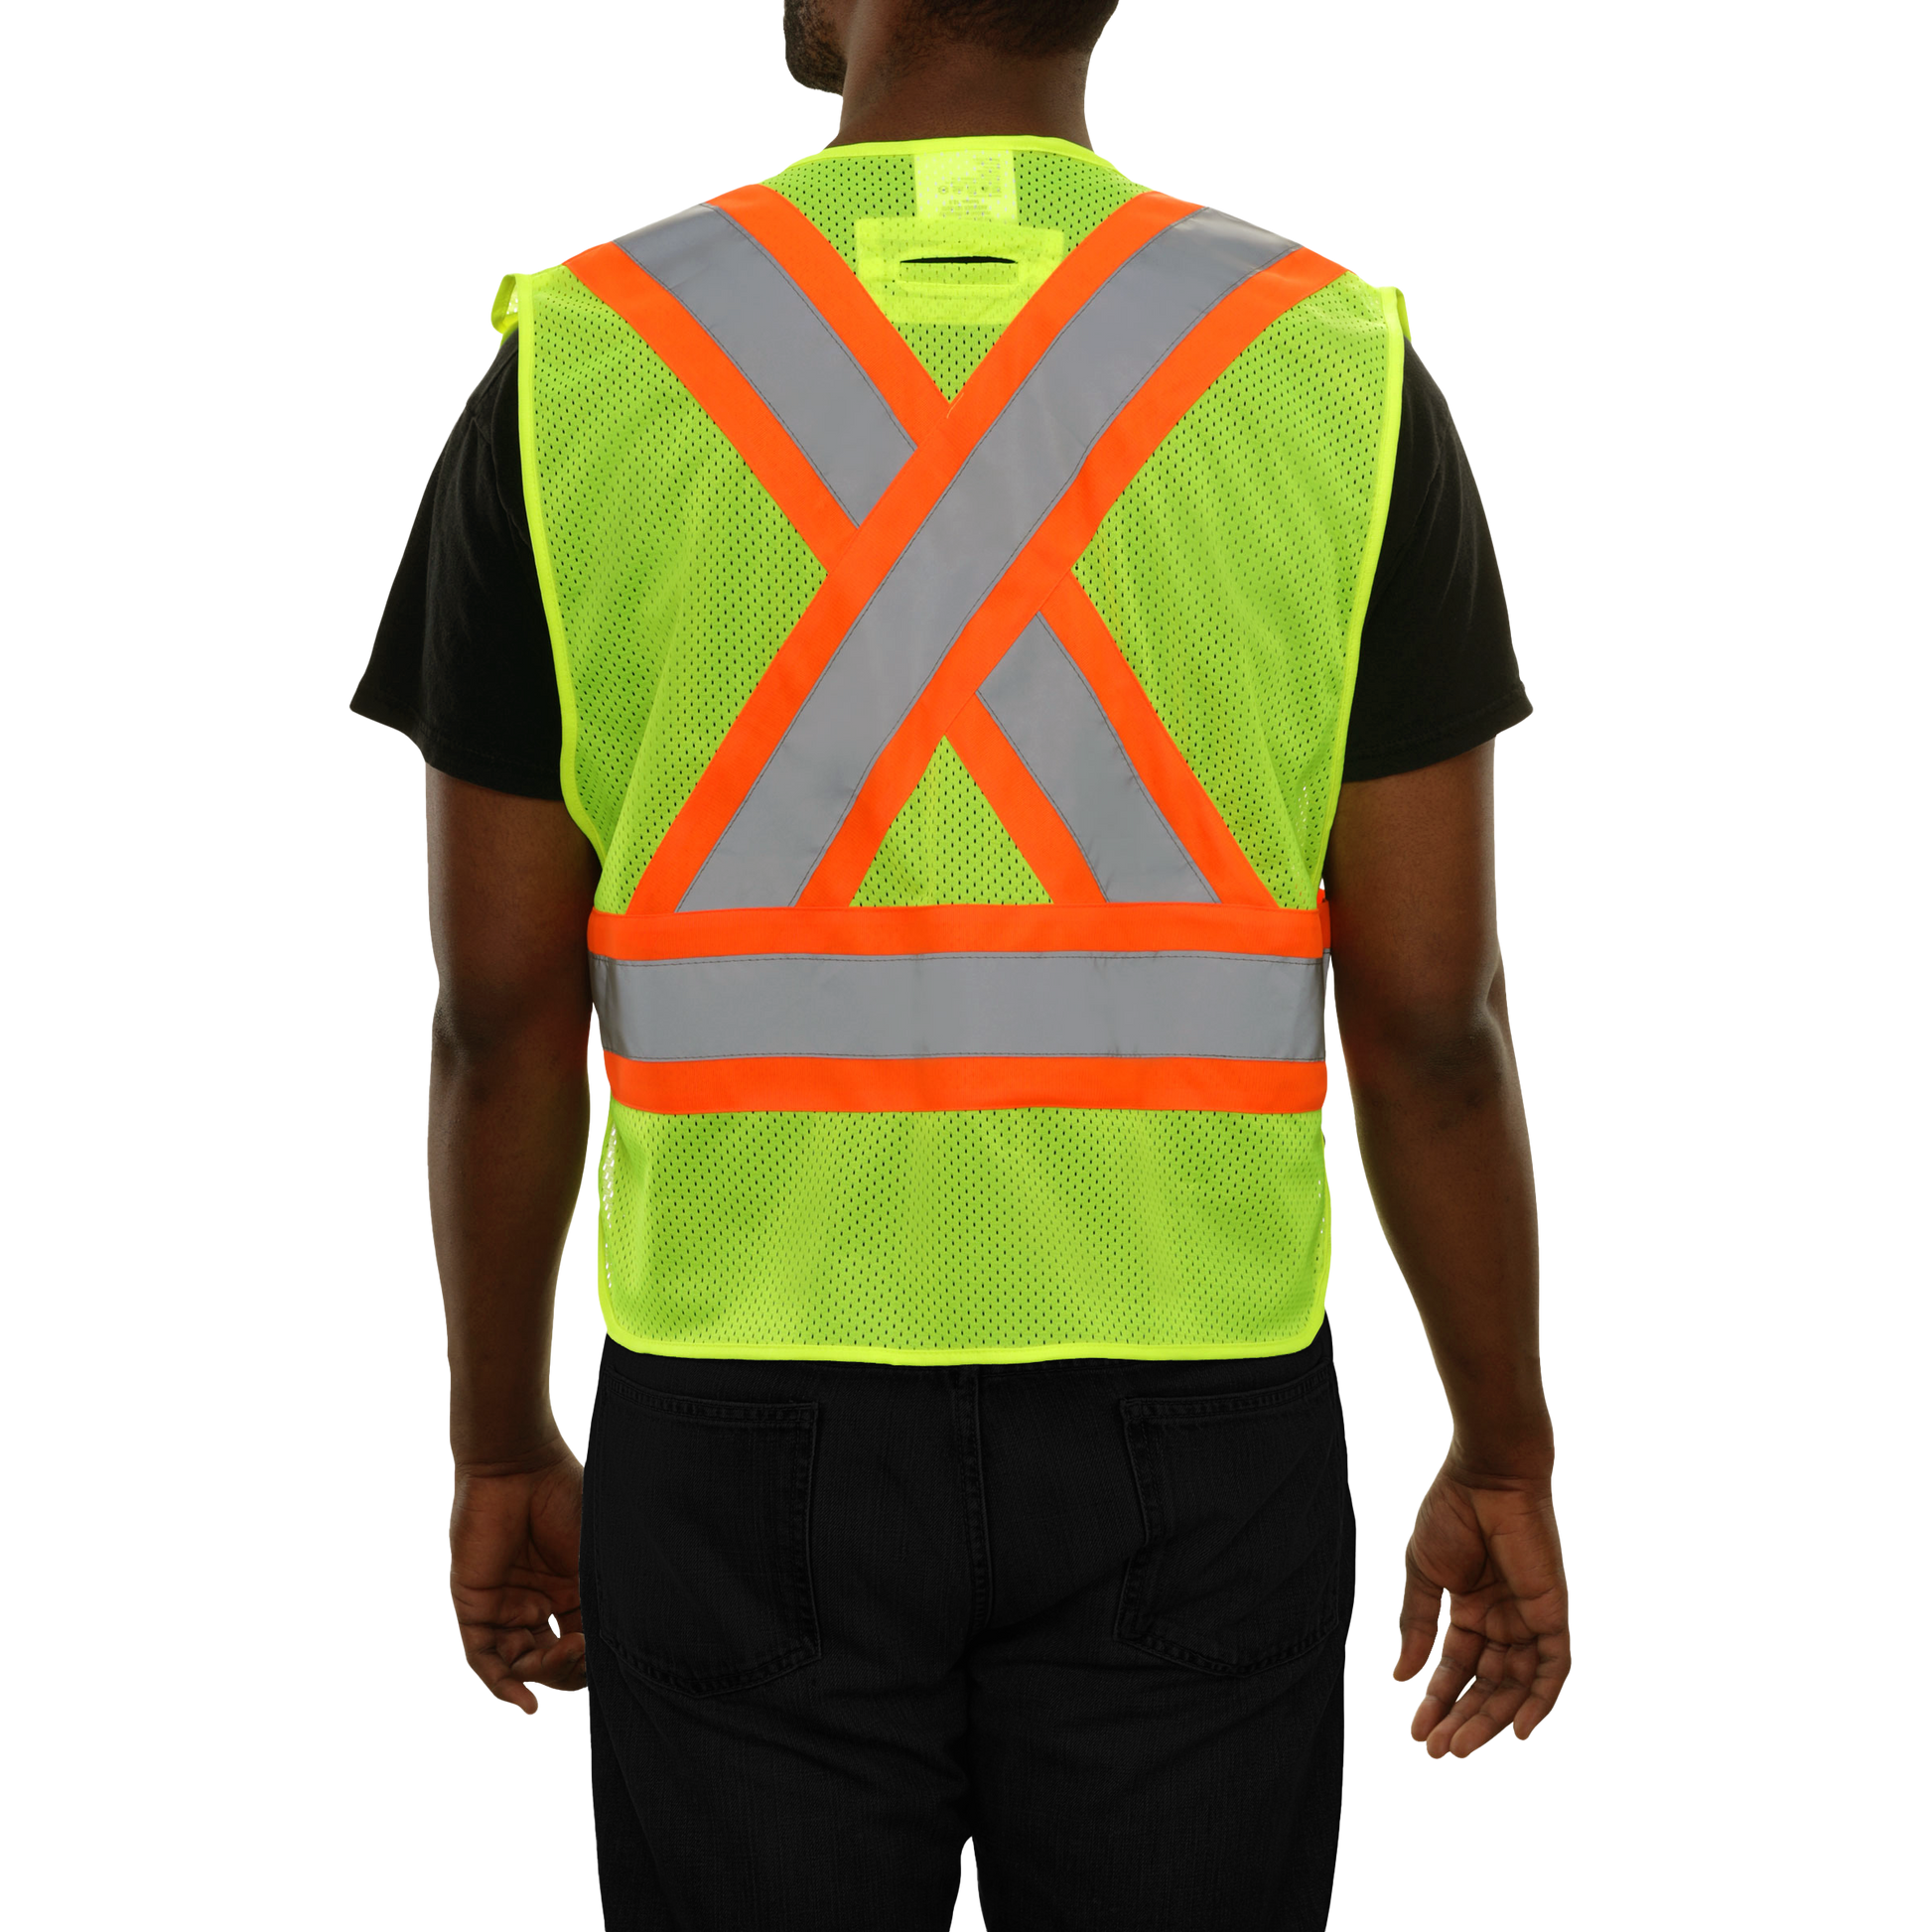 Reflective Public Safety Tactical Vest: 566GXLM – Reflective Apparel Inc